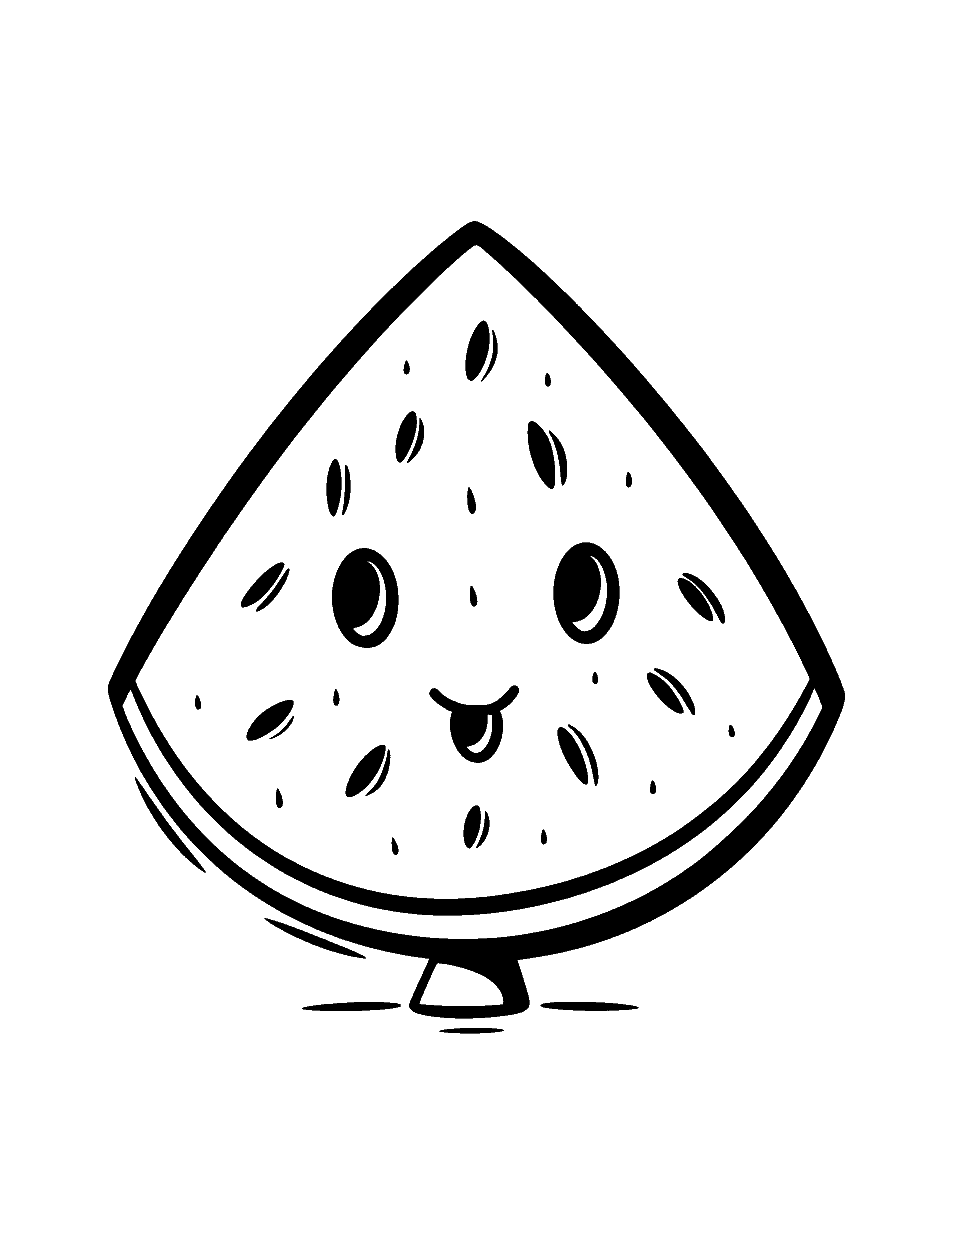 Kawaii Watermelon Slice Cute Coloring Page - A watermelon slice with a cute face and colorful seeds.